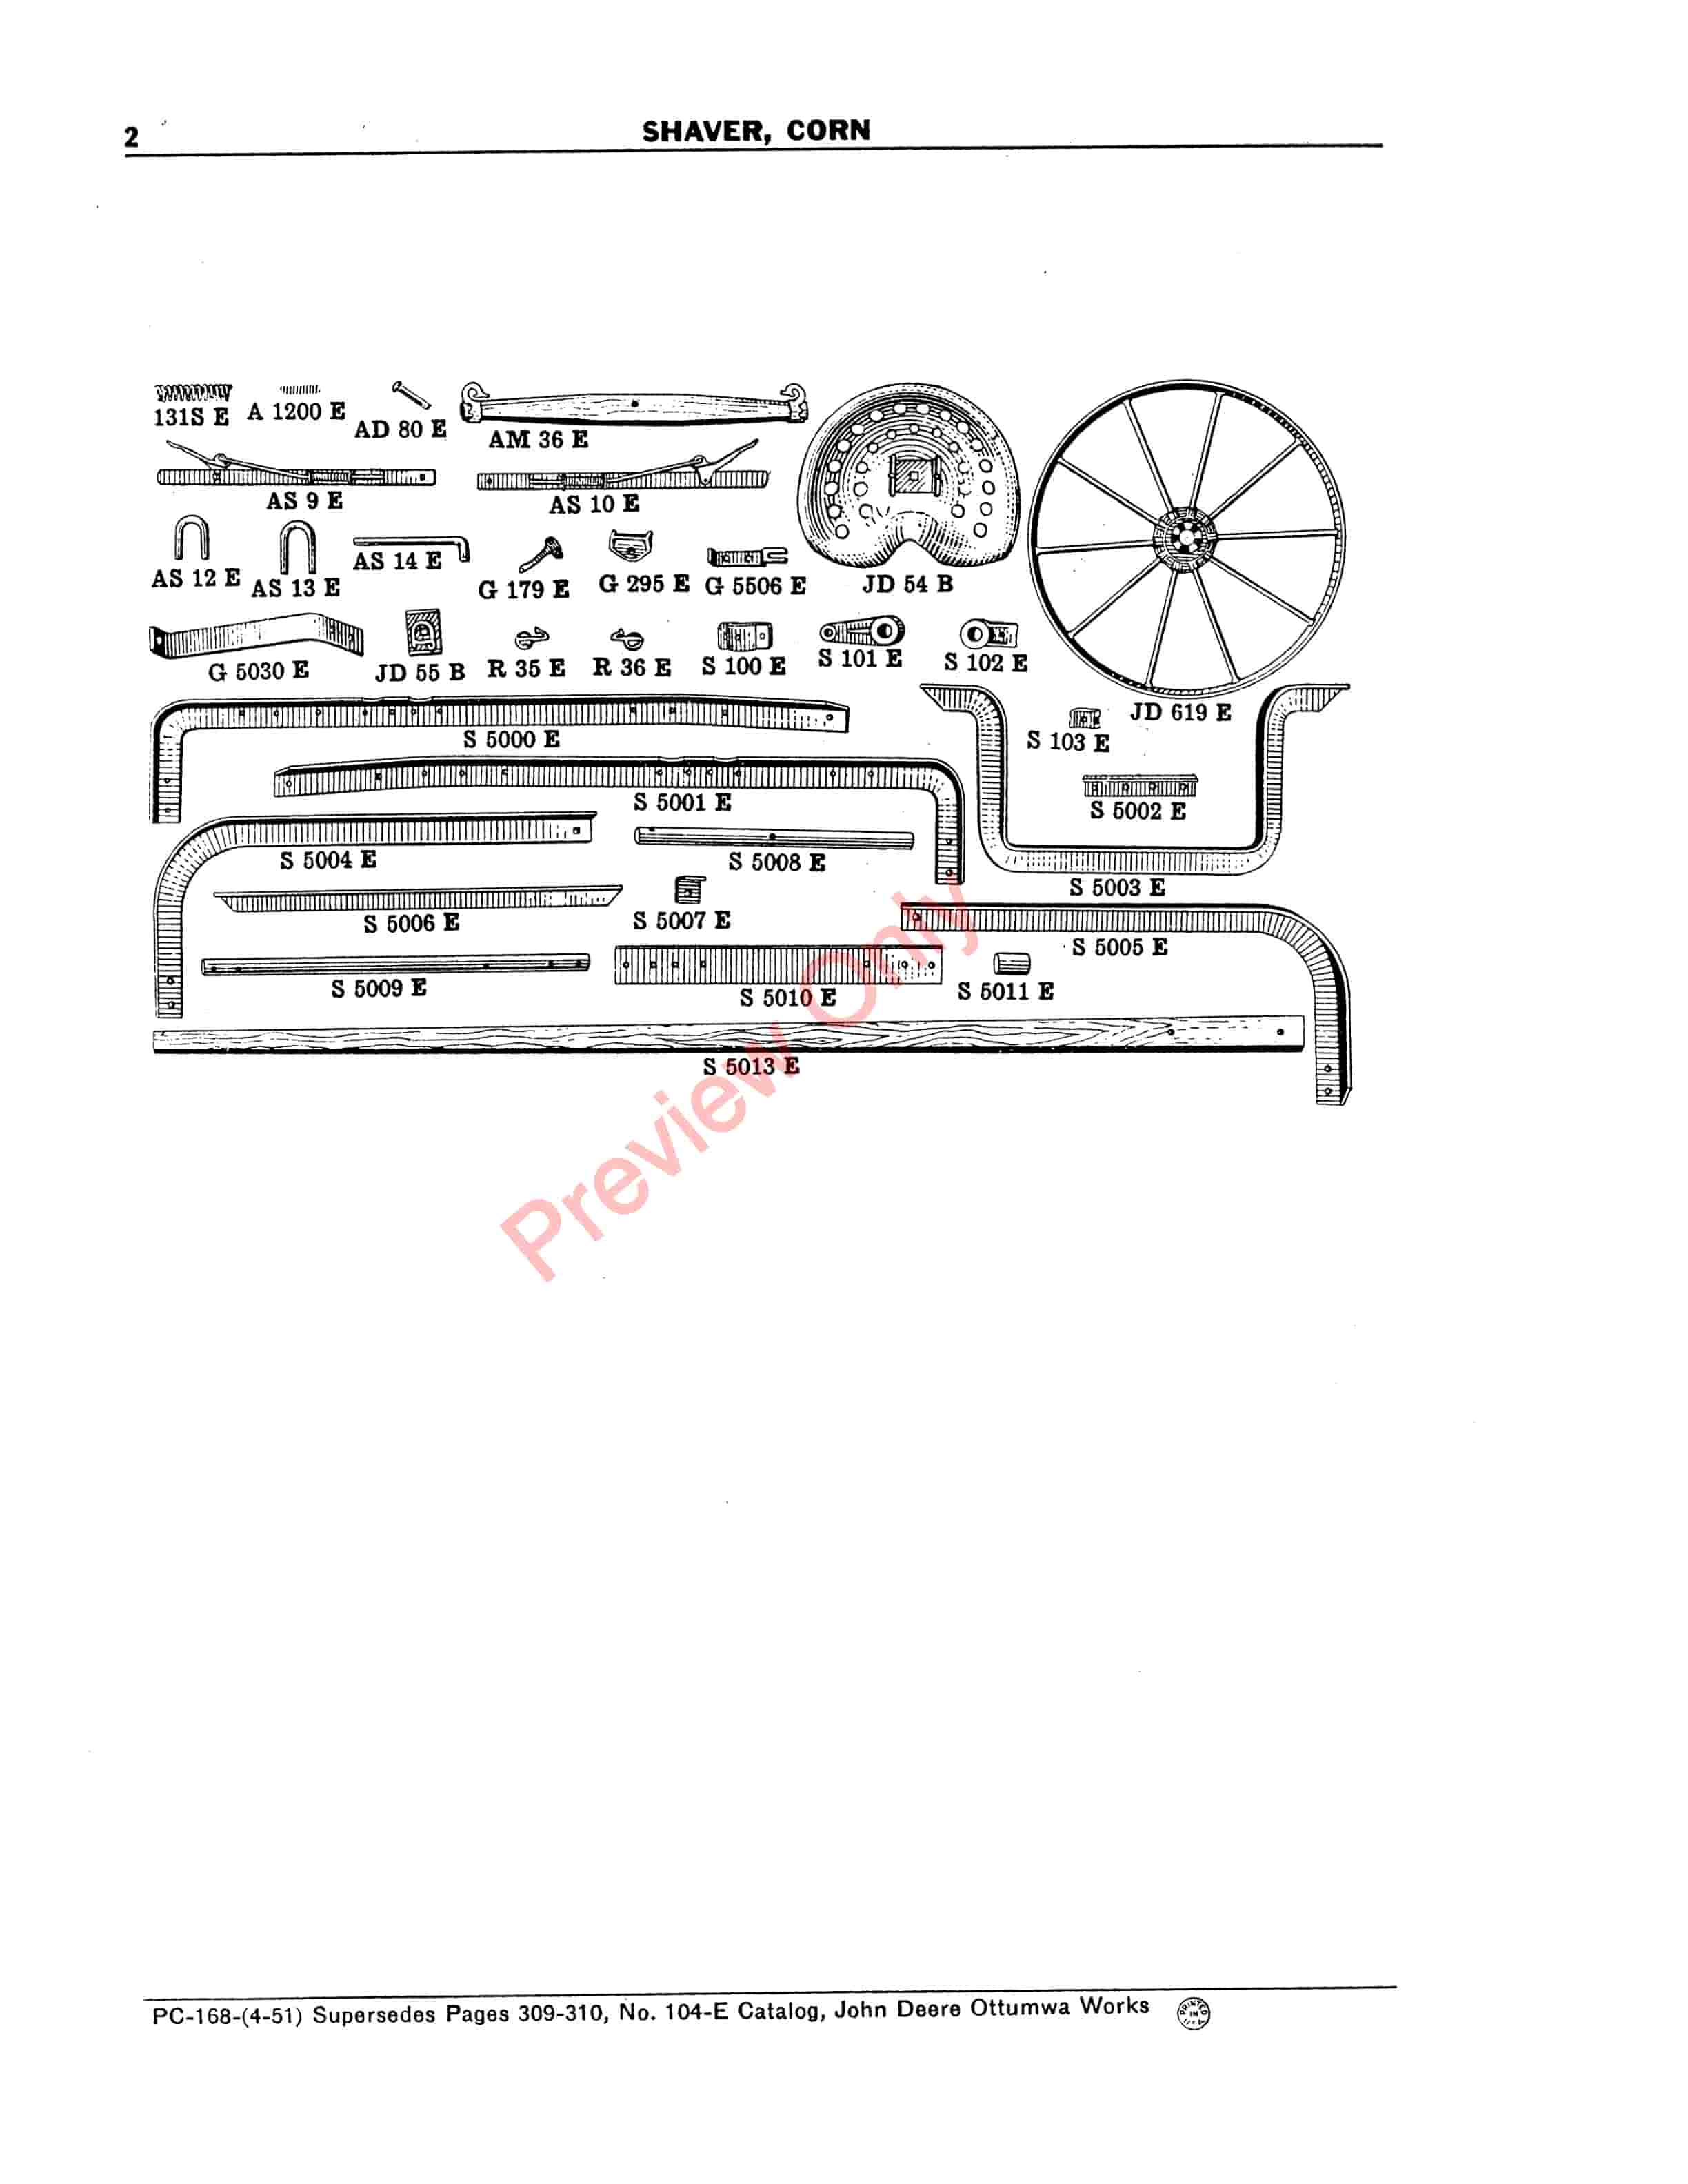 John Deere Corn Shaver Parts Catalog PC168 01APR51-4